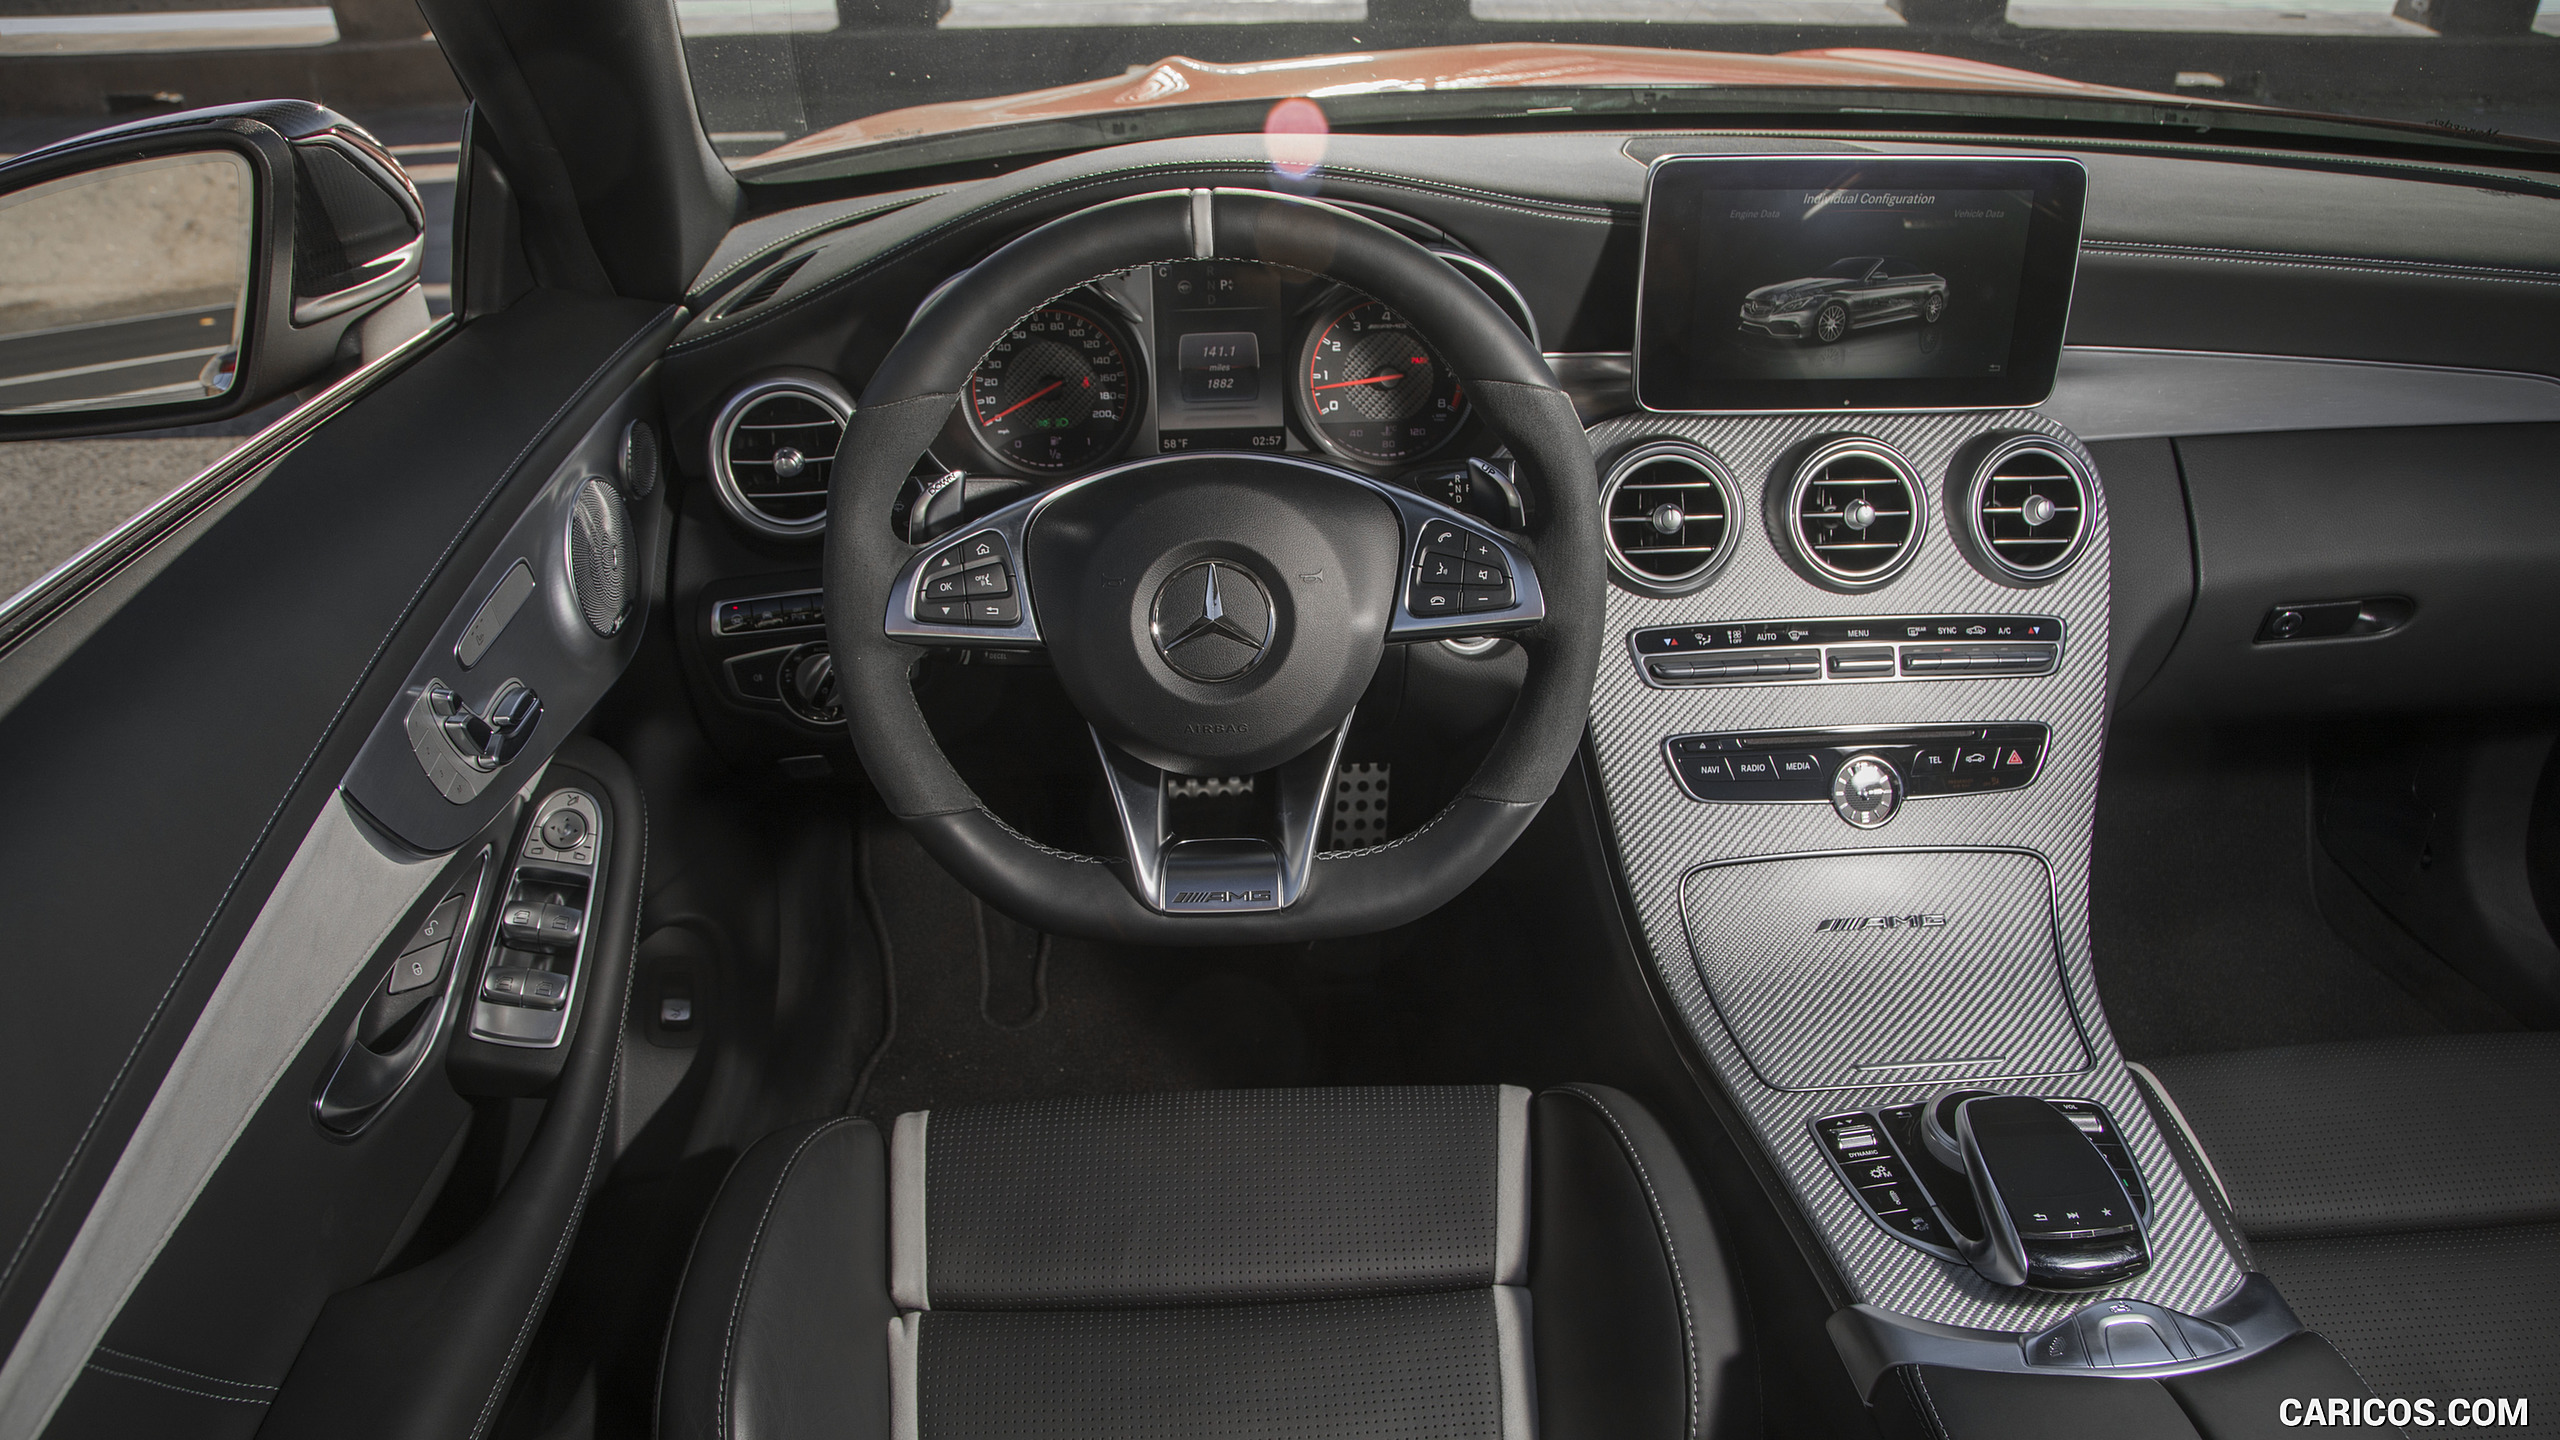 2017 Mercedes-AMG C63 S Cabriolet (US-Spec) - Interior, Cockpit, #212 of 222